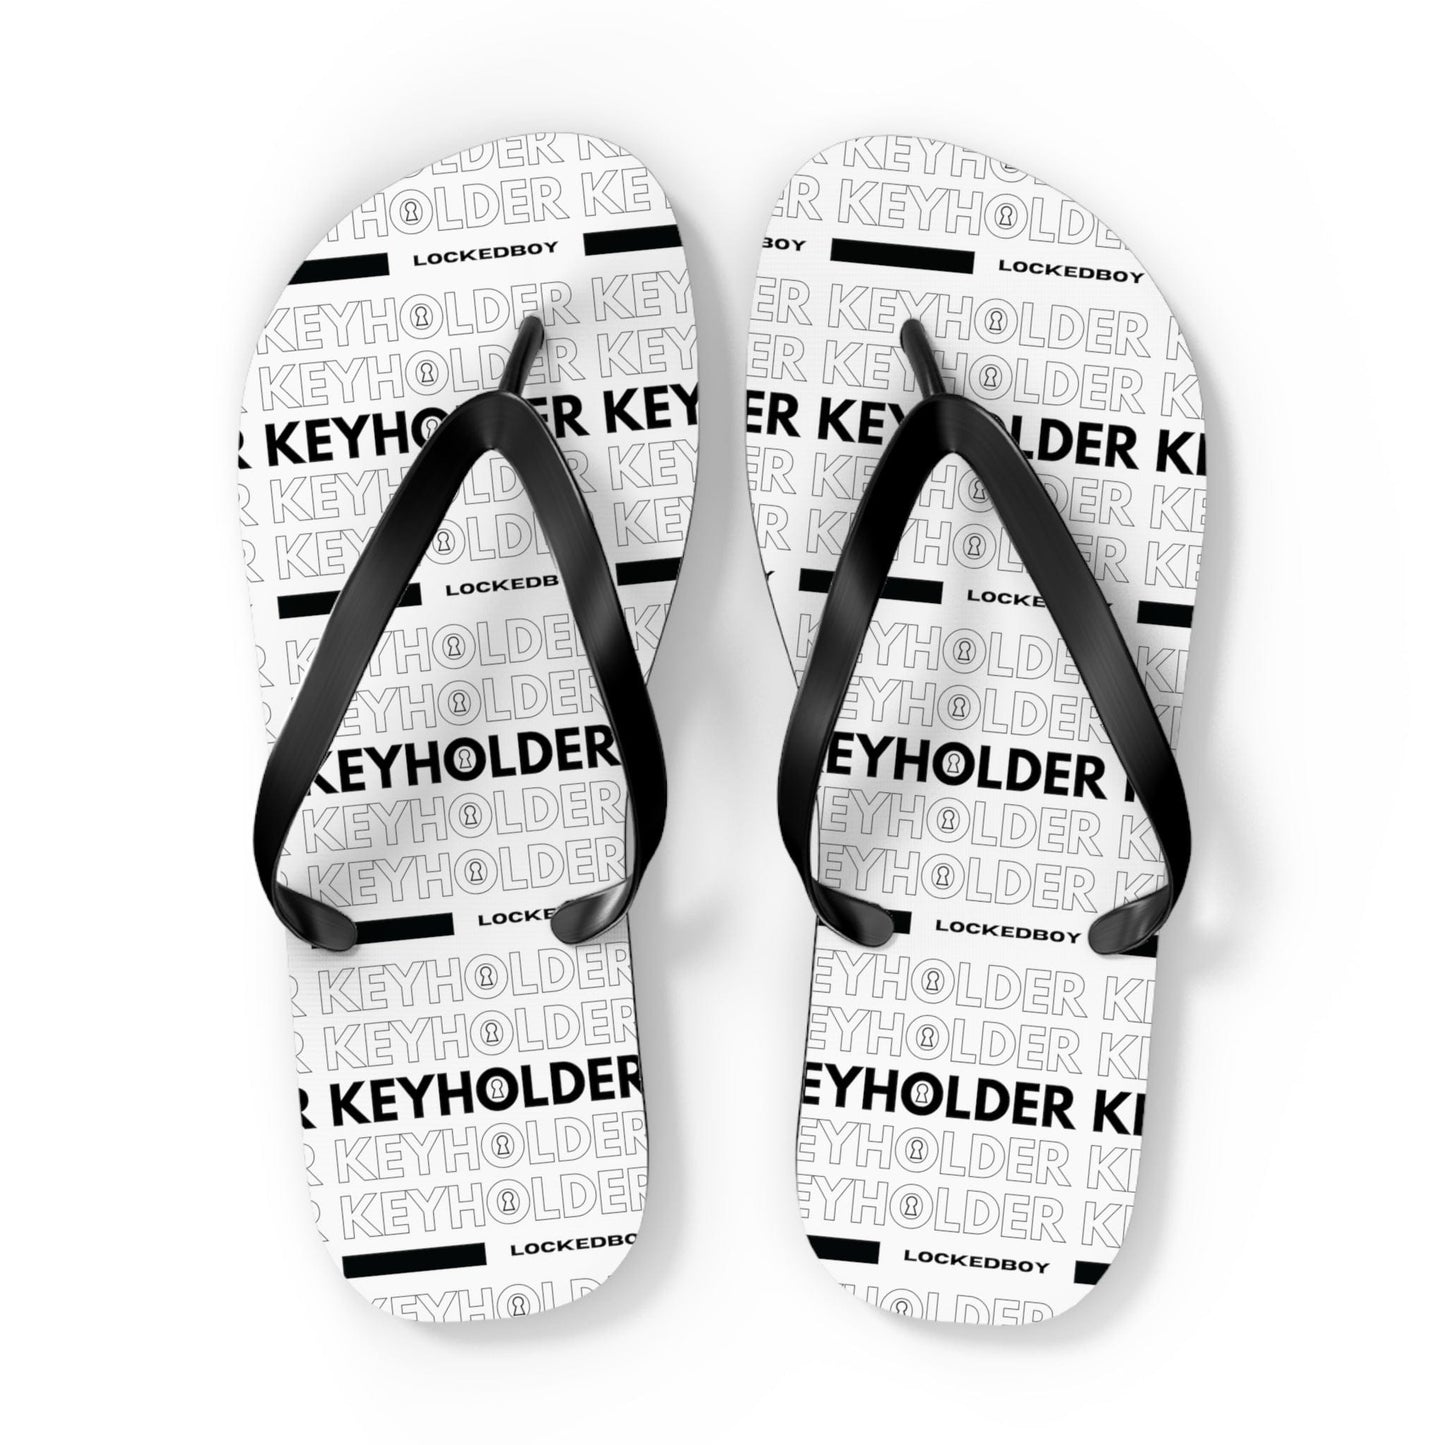 Shoes XL / Black sole KeyHolder Bag Inspo Unisex Flip-Flops LEATHERDADDY BATOR